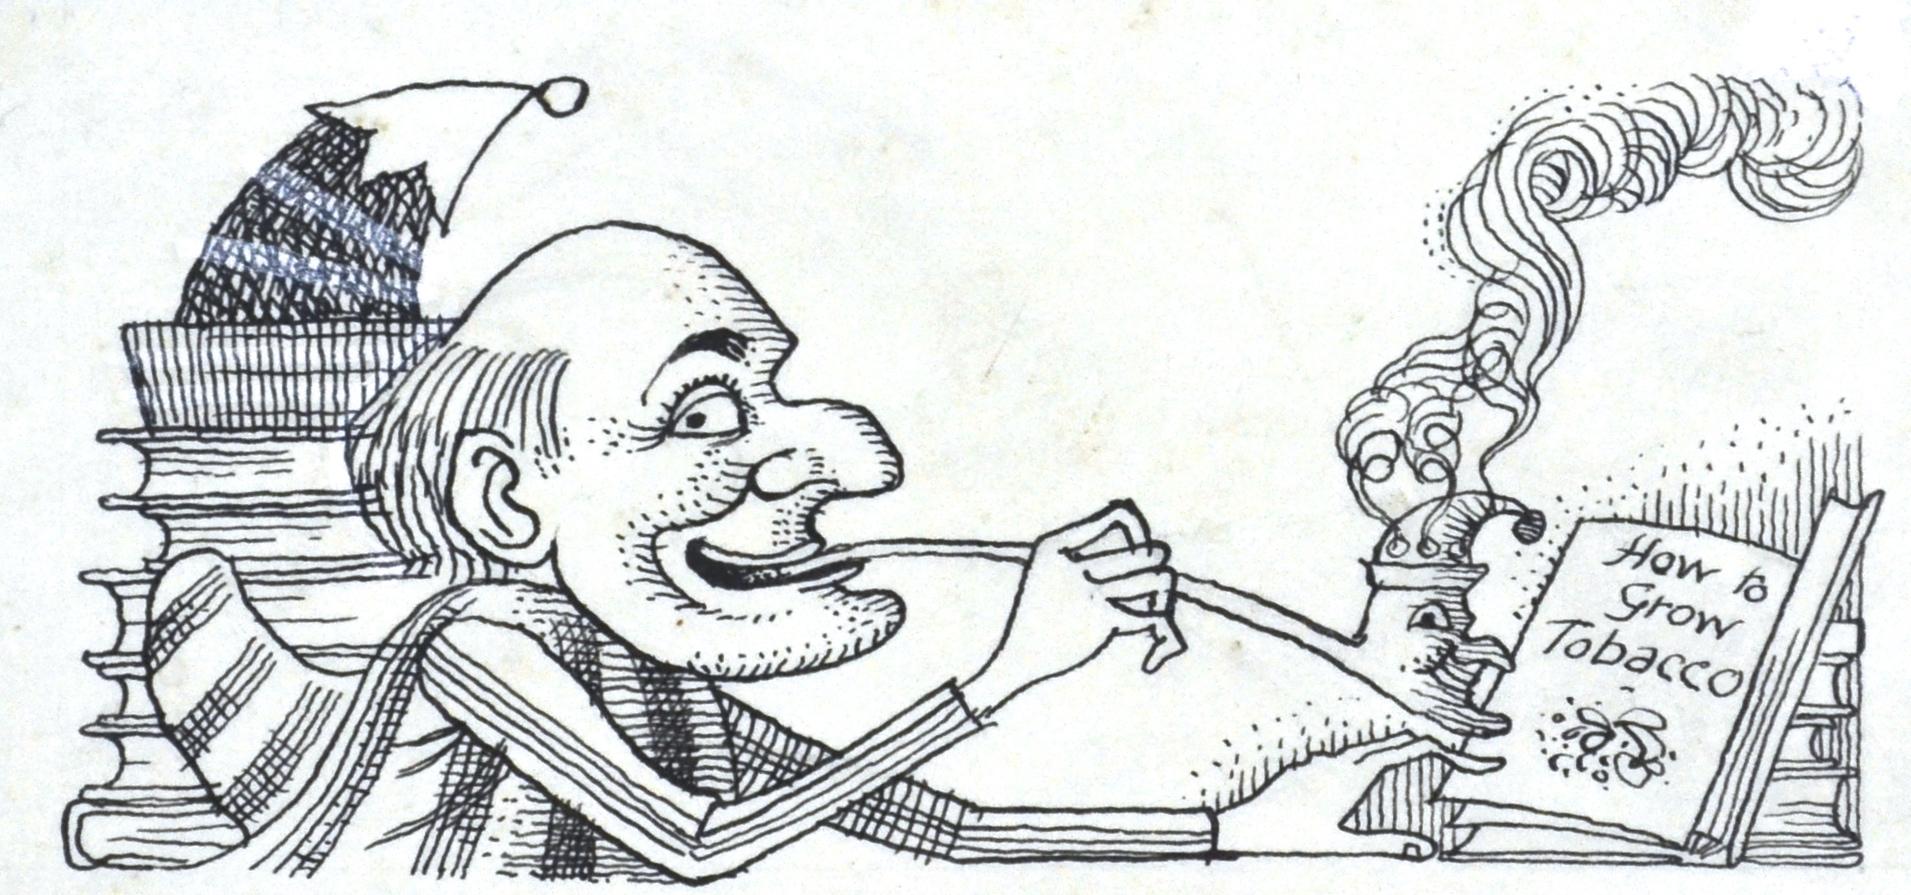 Mr Punch - How to Grow Tobacco - Original ink 20th Century British illustration